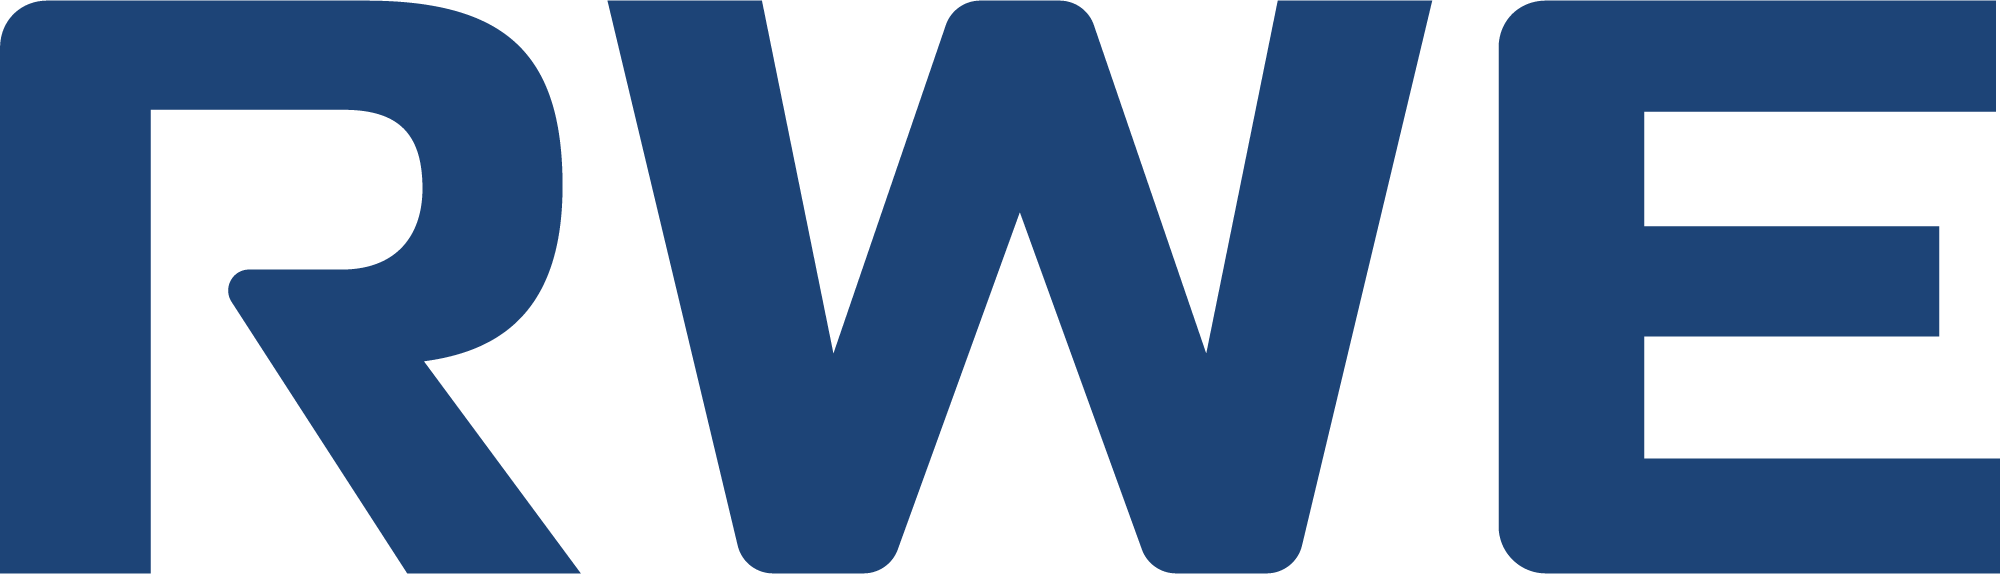 RWE Supply & Trading GmbH Logo